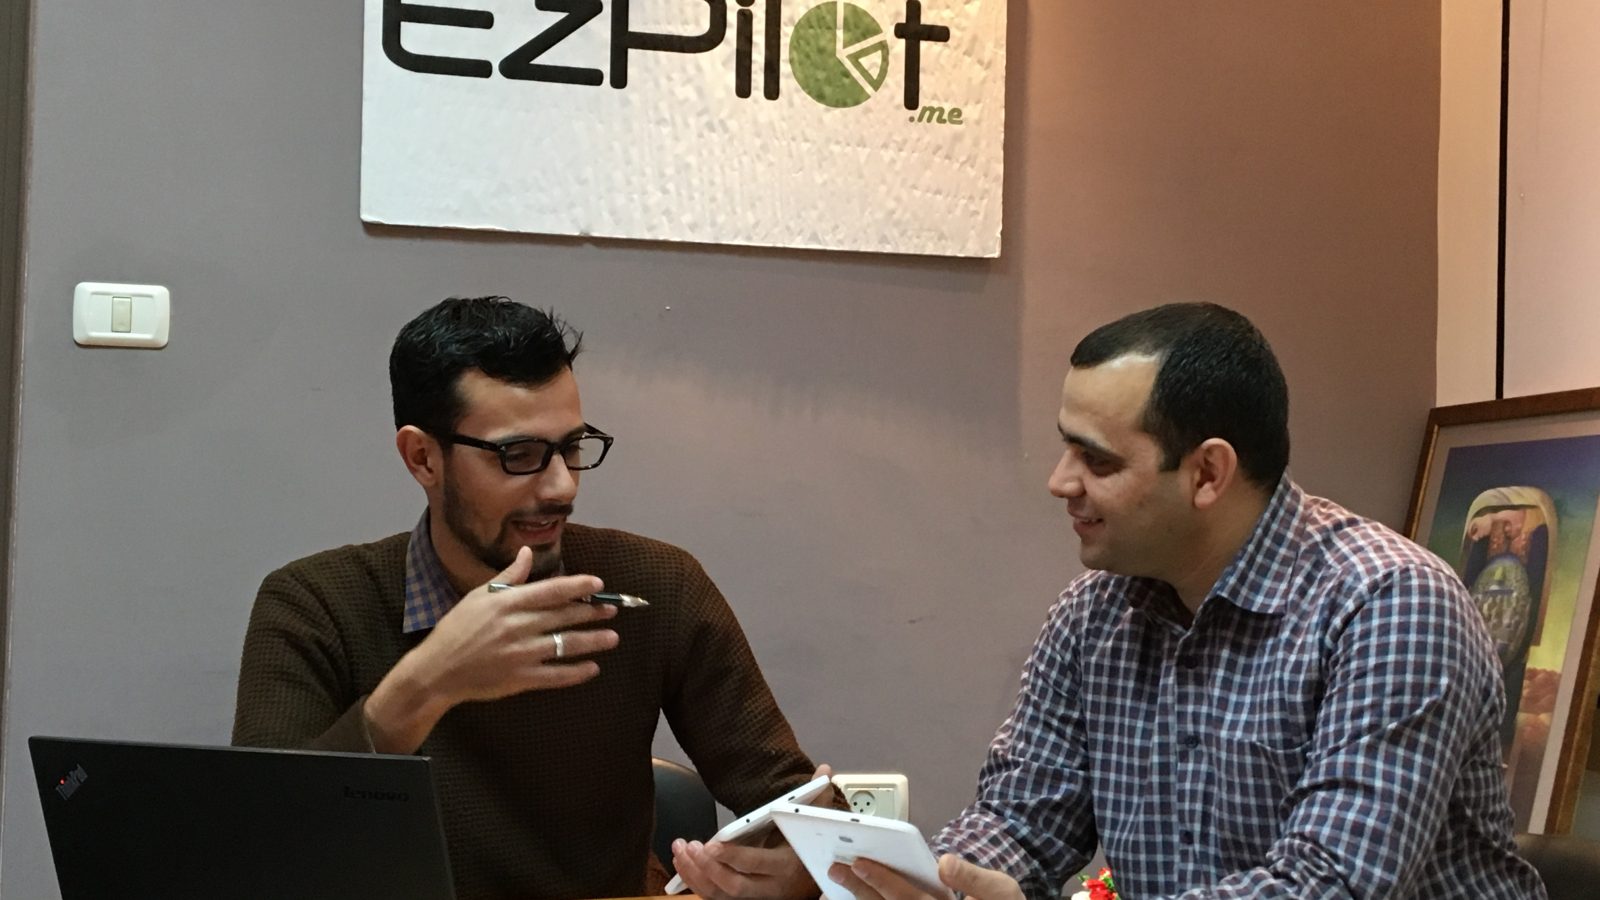  Hussein Salah du projet EzPilot